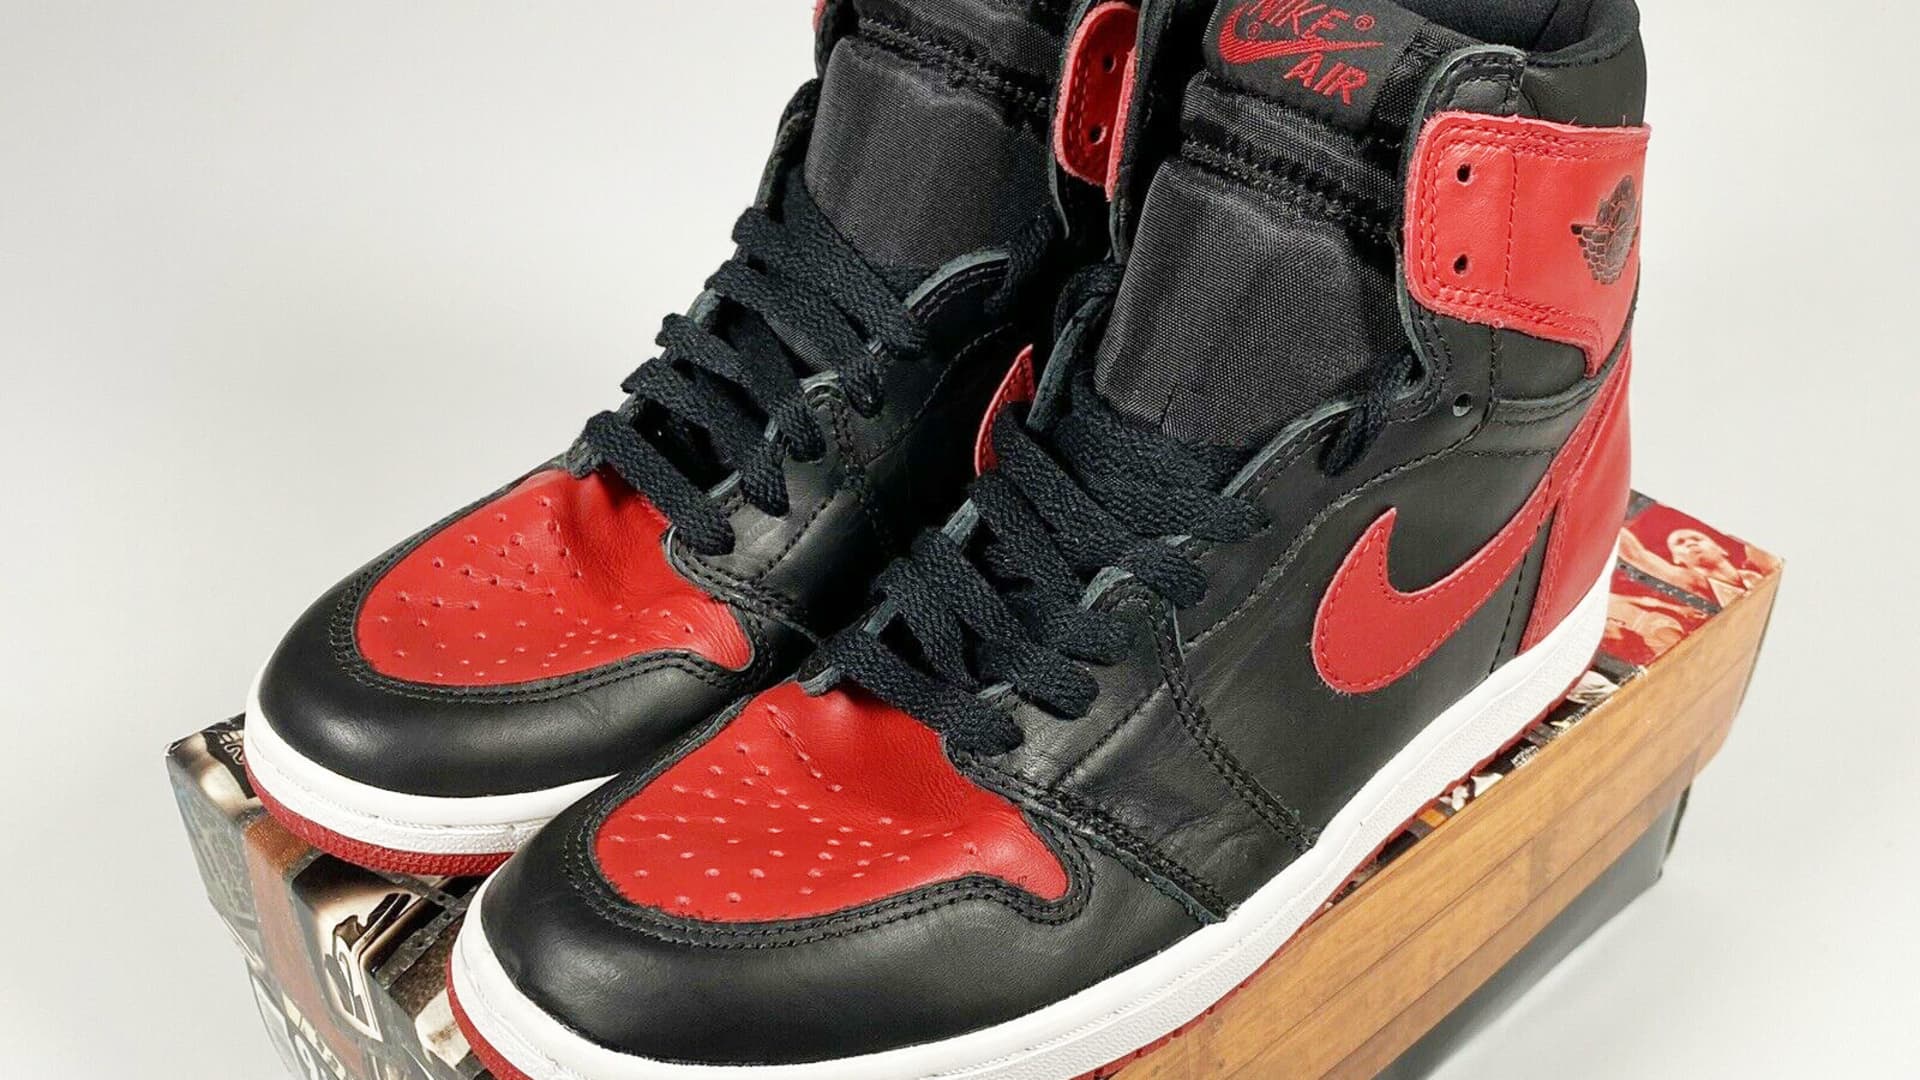 Let at ske Sekretær etnisk EBay touts sale of rare Air Jordan sneakers